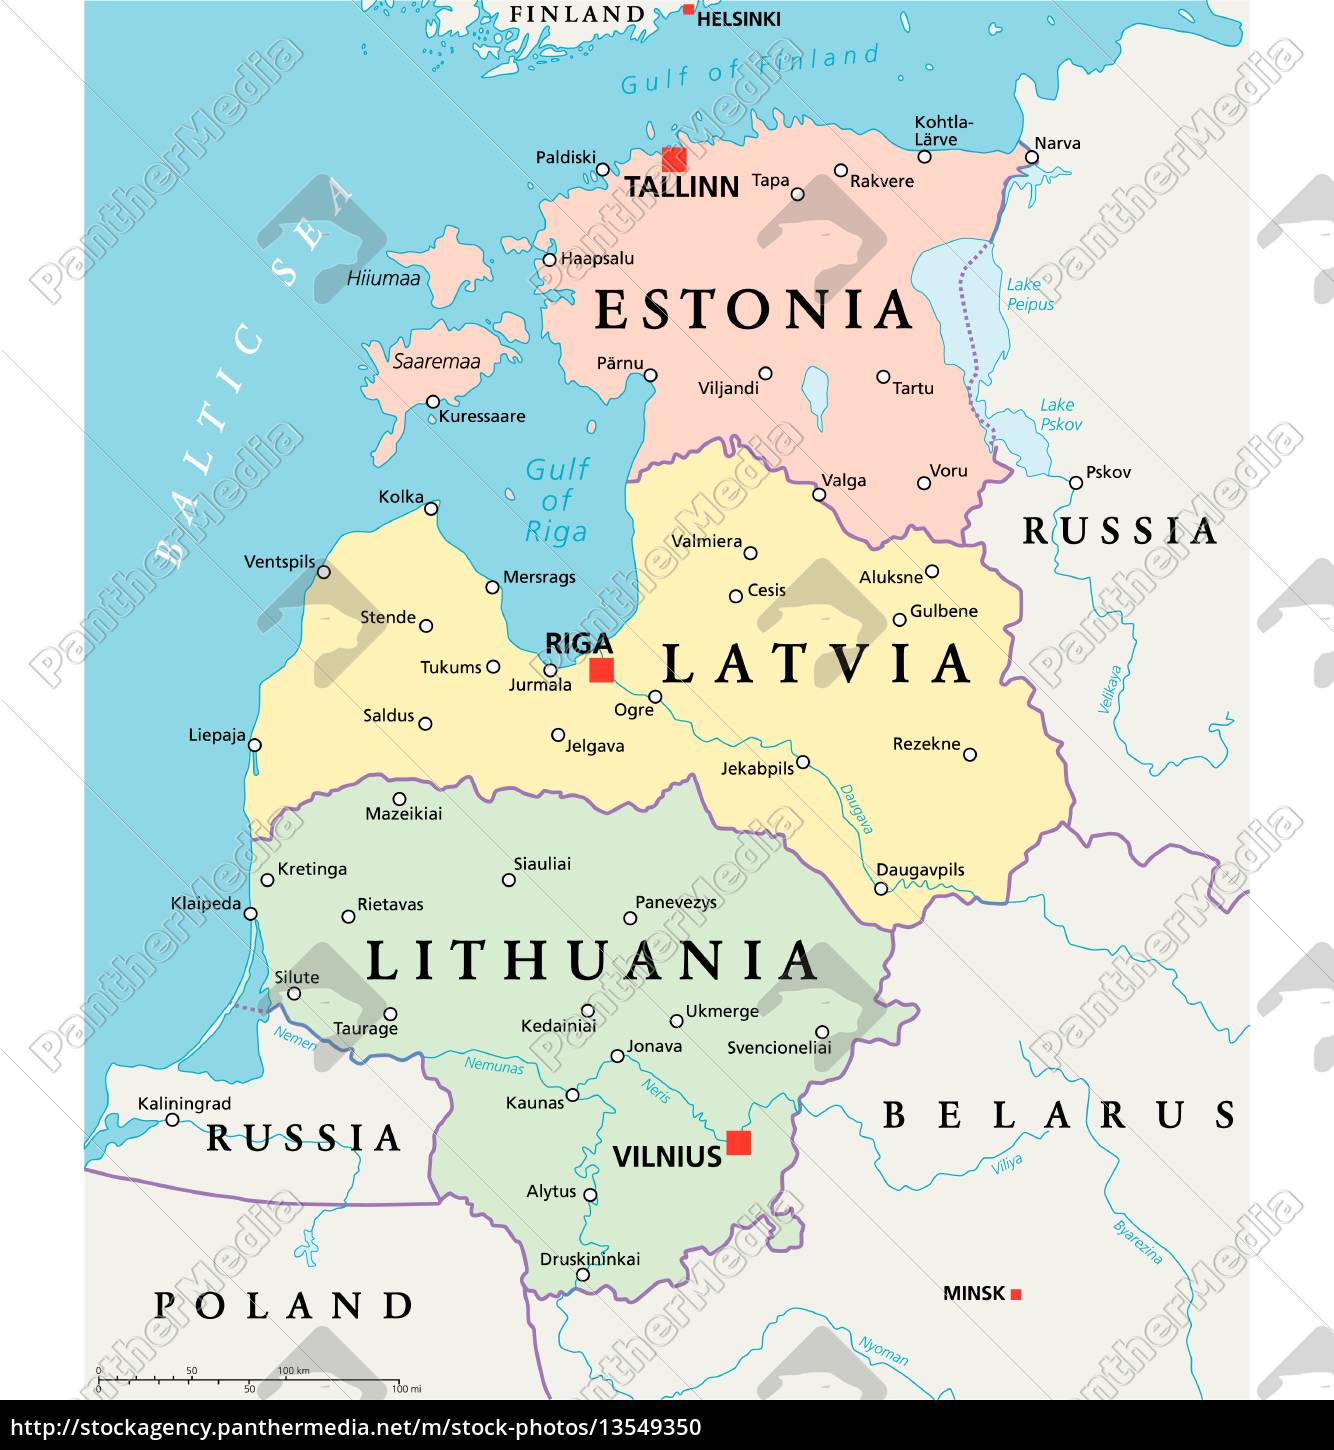 Partnervermittlung baltische staaten